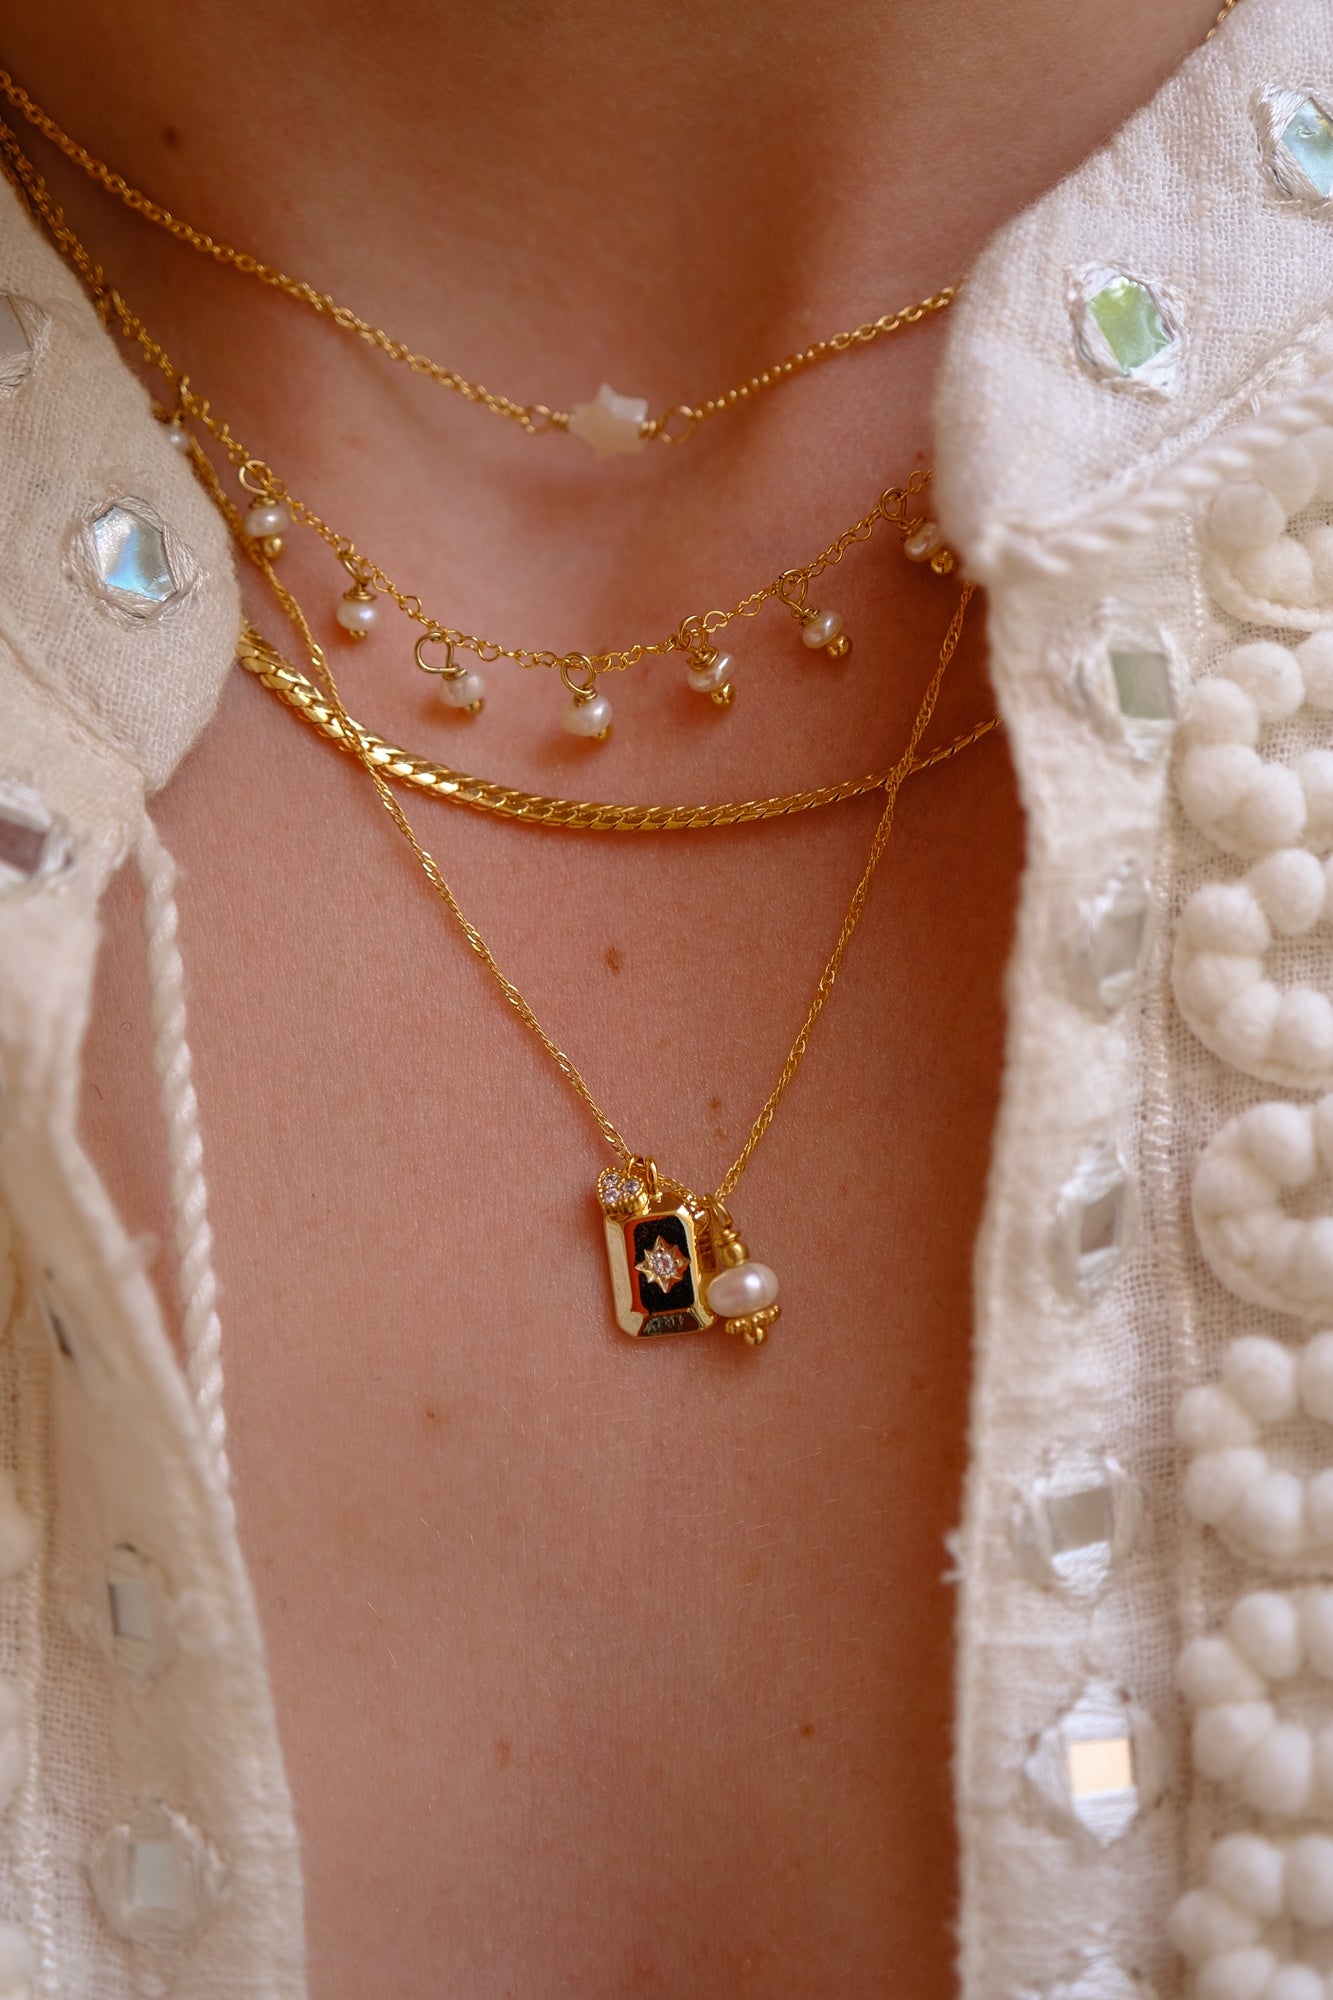 “Lana” necklace